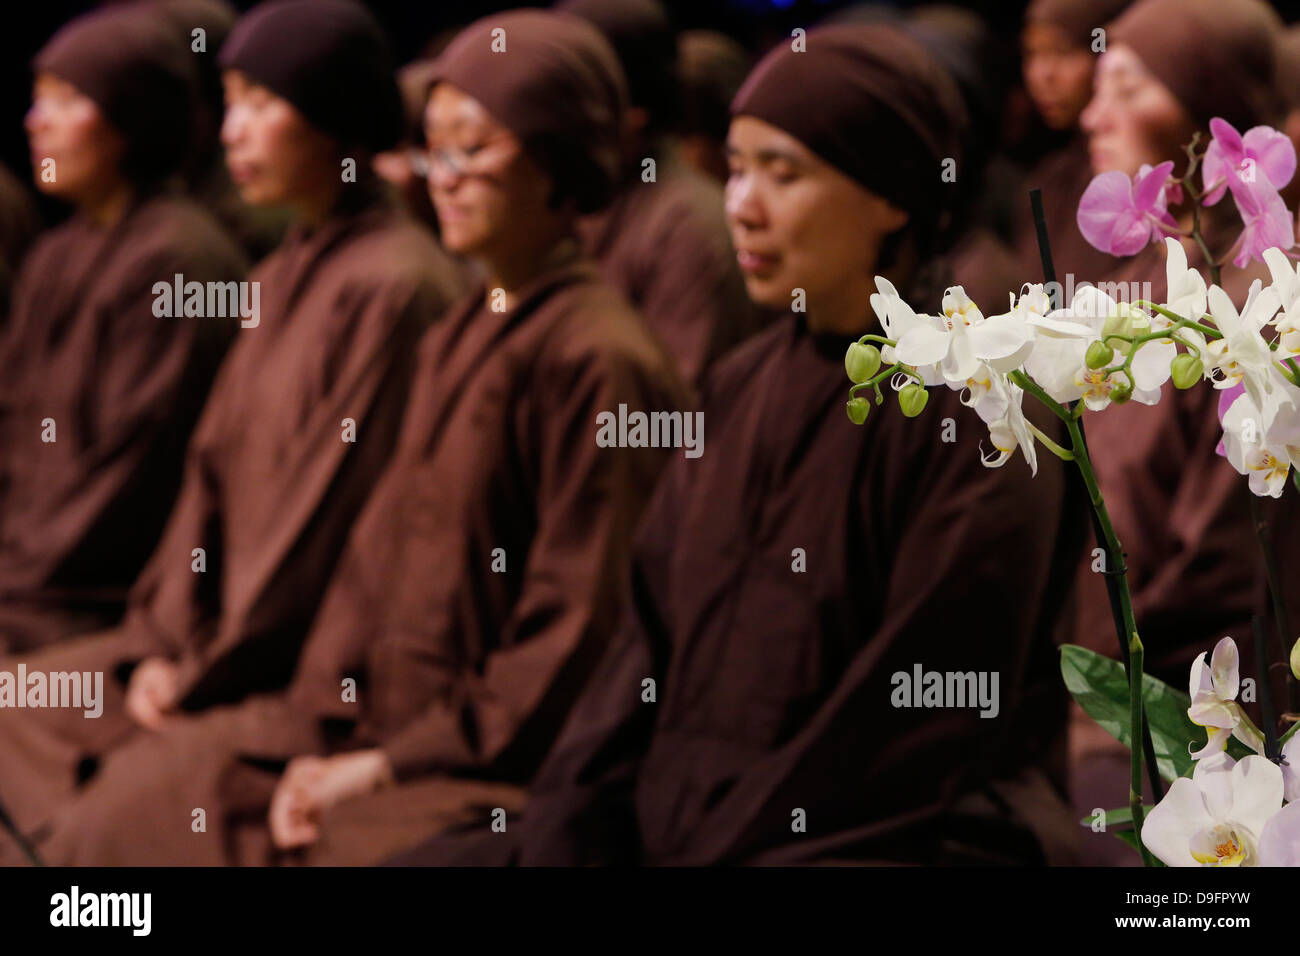 Buddhist nuns meditating, La Defense, Hauts-de-Seine, France Stock Photo